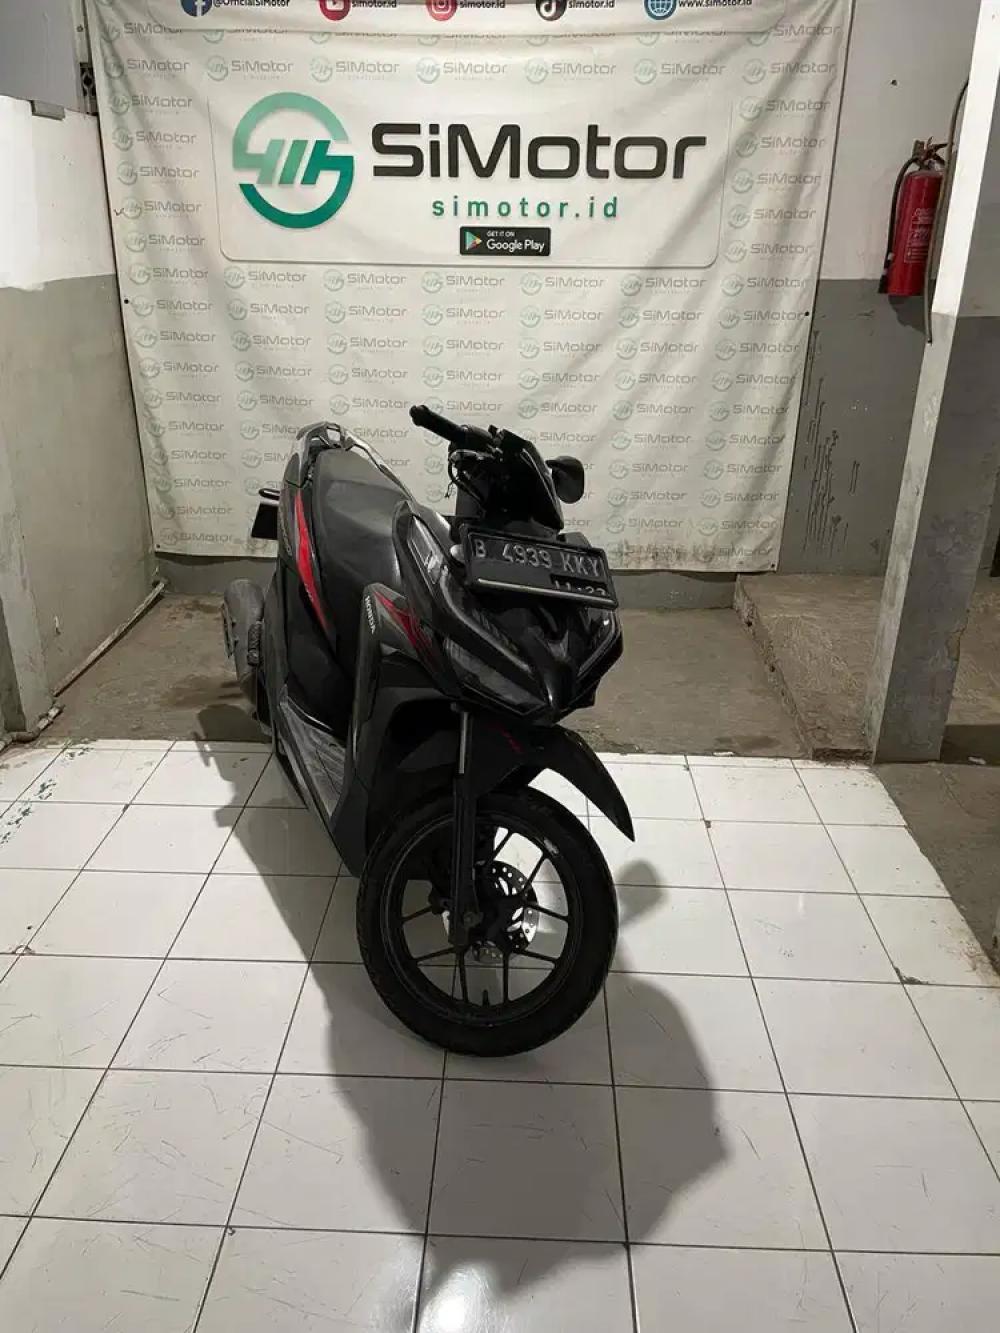 Vario 125 Olx Bekasi Kota. Simotor Honda Vario 125 Cbs 2018 Raharja Motor Bekasi